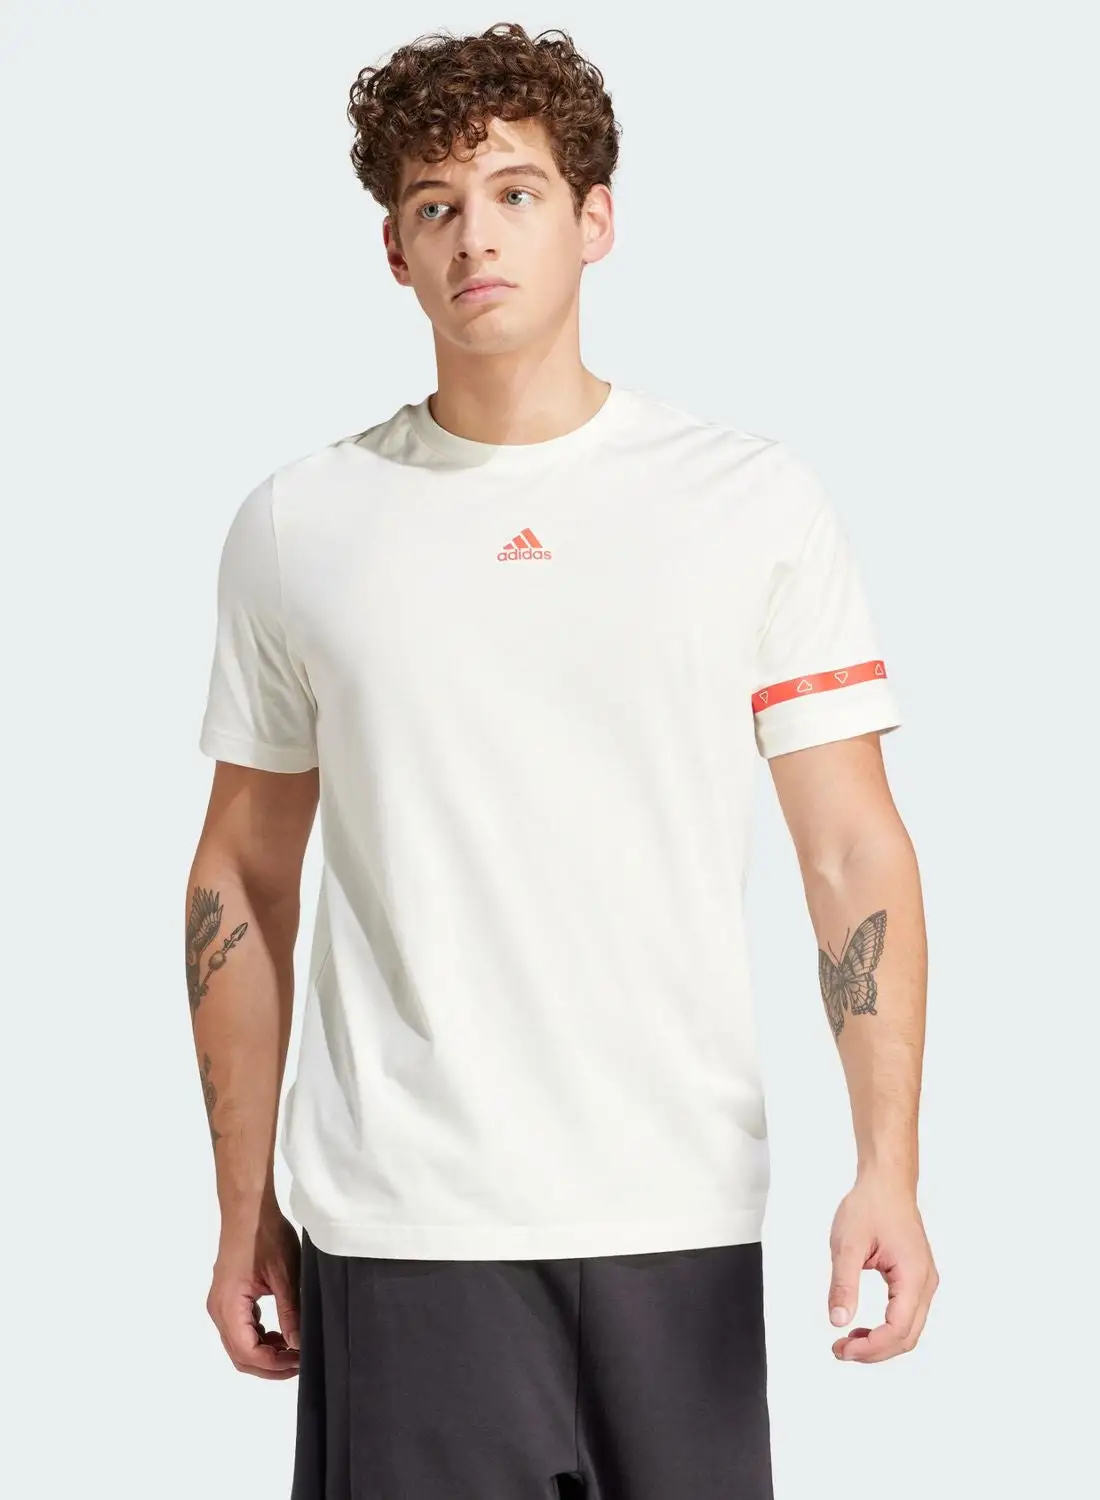 Adidas Brand Love Collegiate T-Shirt